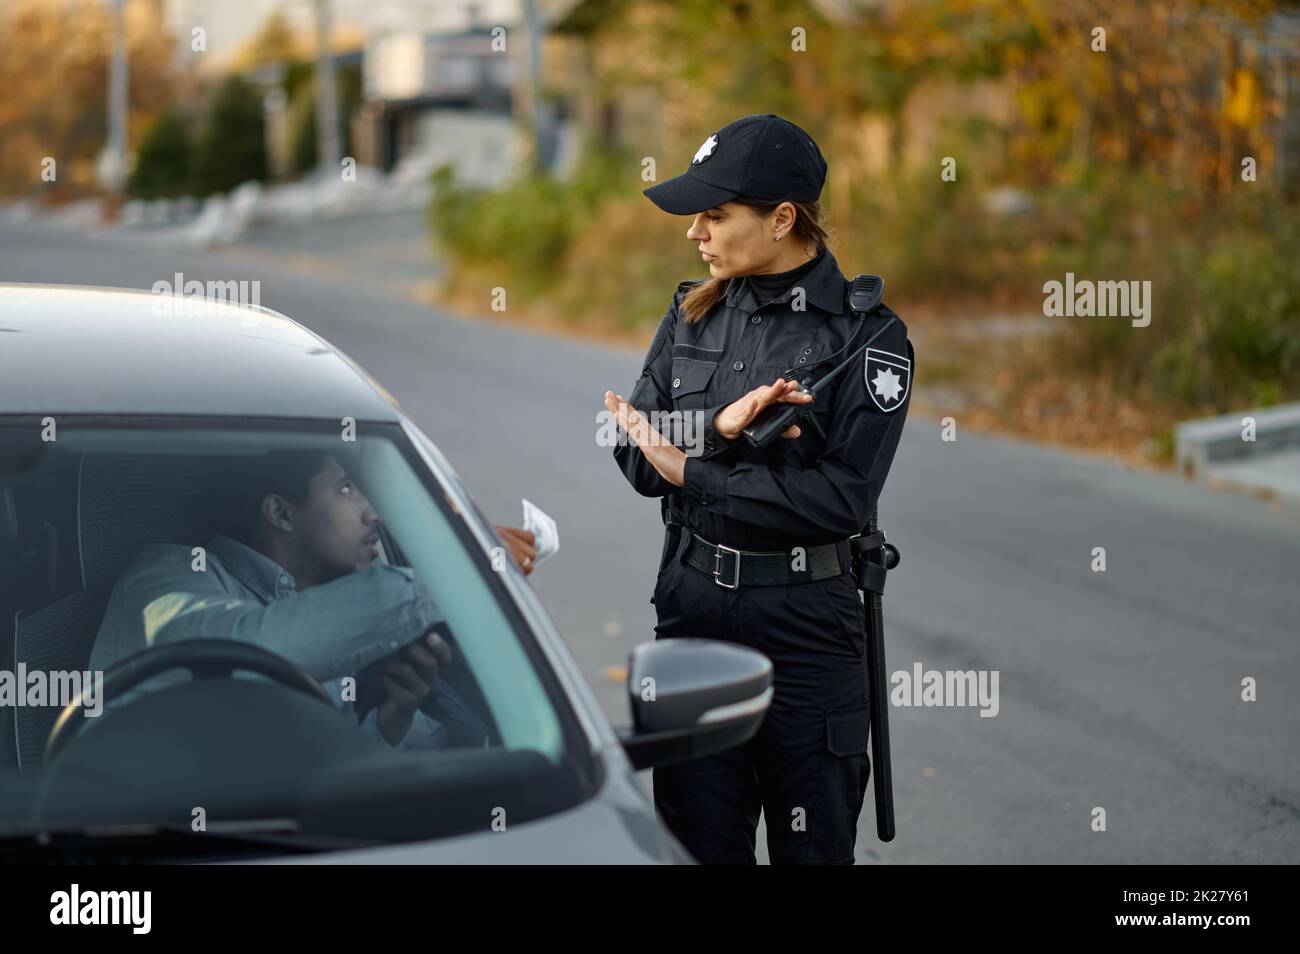 Die Polizistin lehnt Bestechung vom Fahrer ab Stockfoto